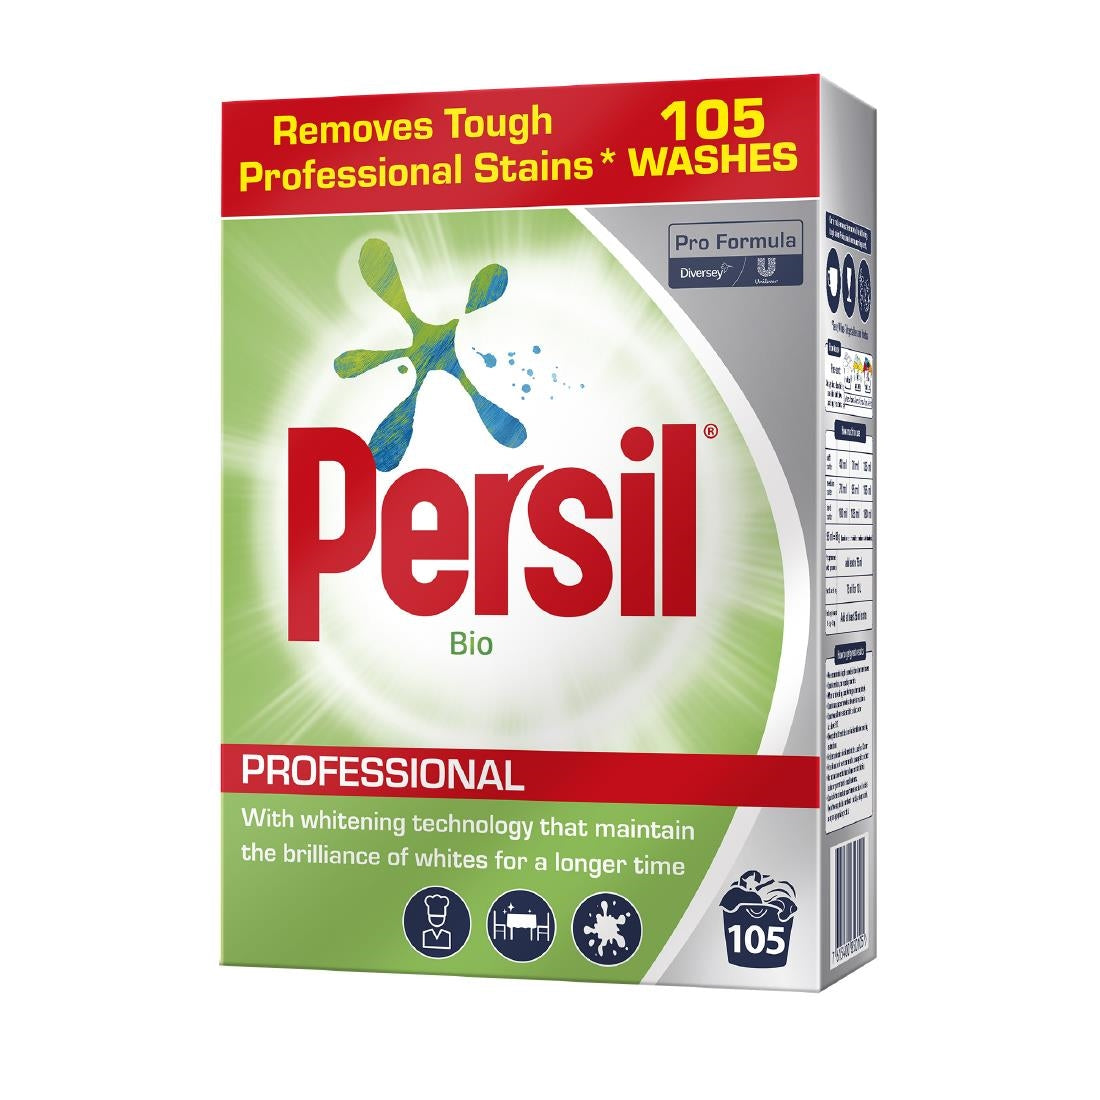 HS951 Persil Pro Formula Bio Laundry Detergent Powder 6.3kg